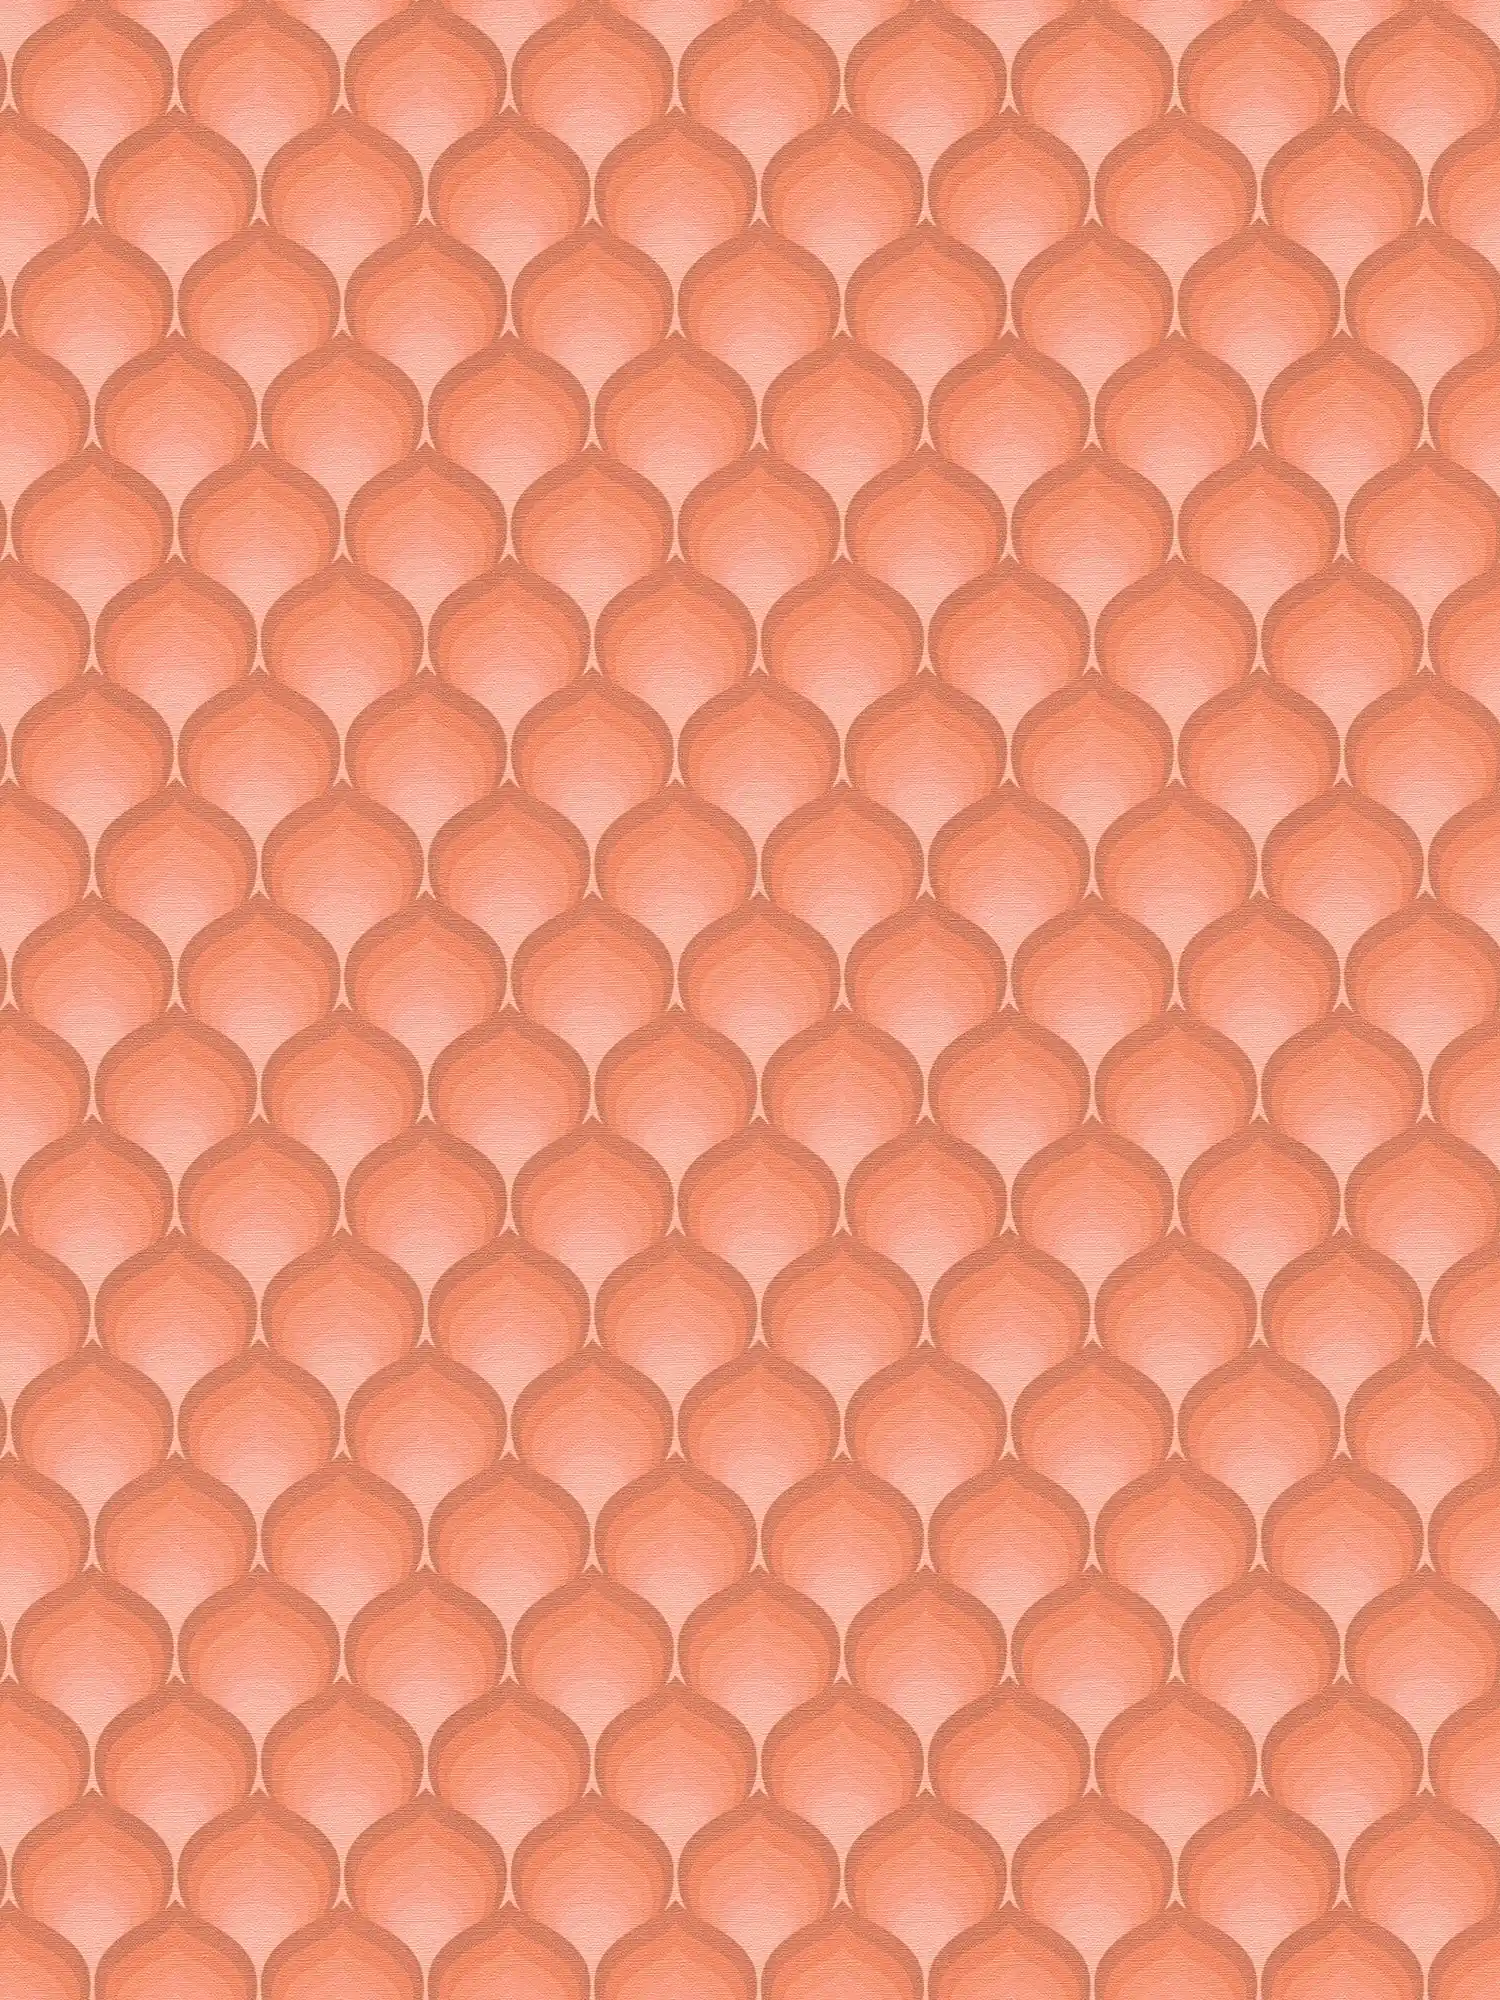 Papel pintado no tejido retro con motivos de escamas en colores cálidos: naranja, rojo, rosa
